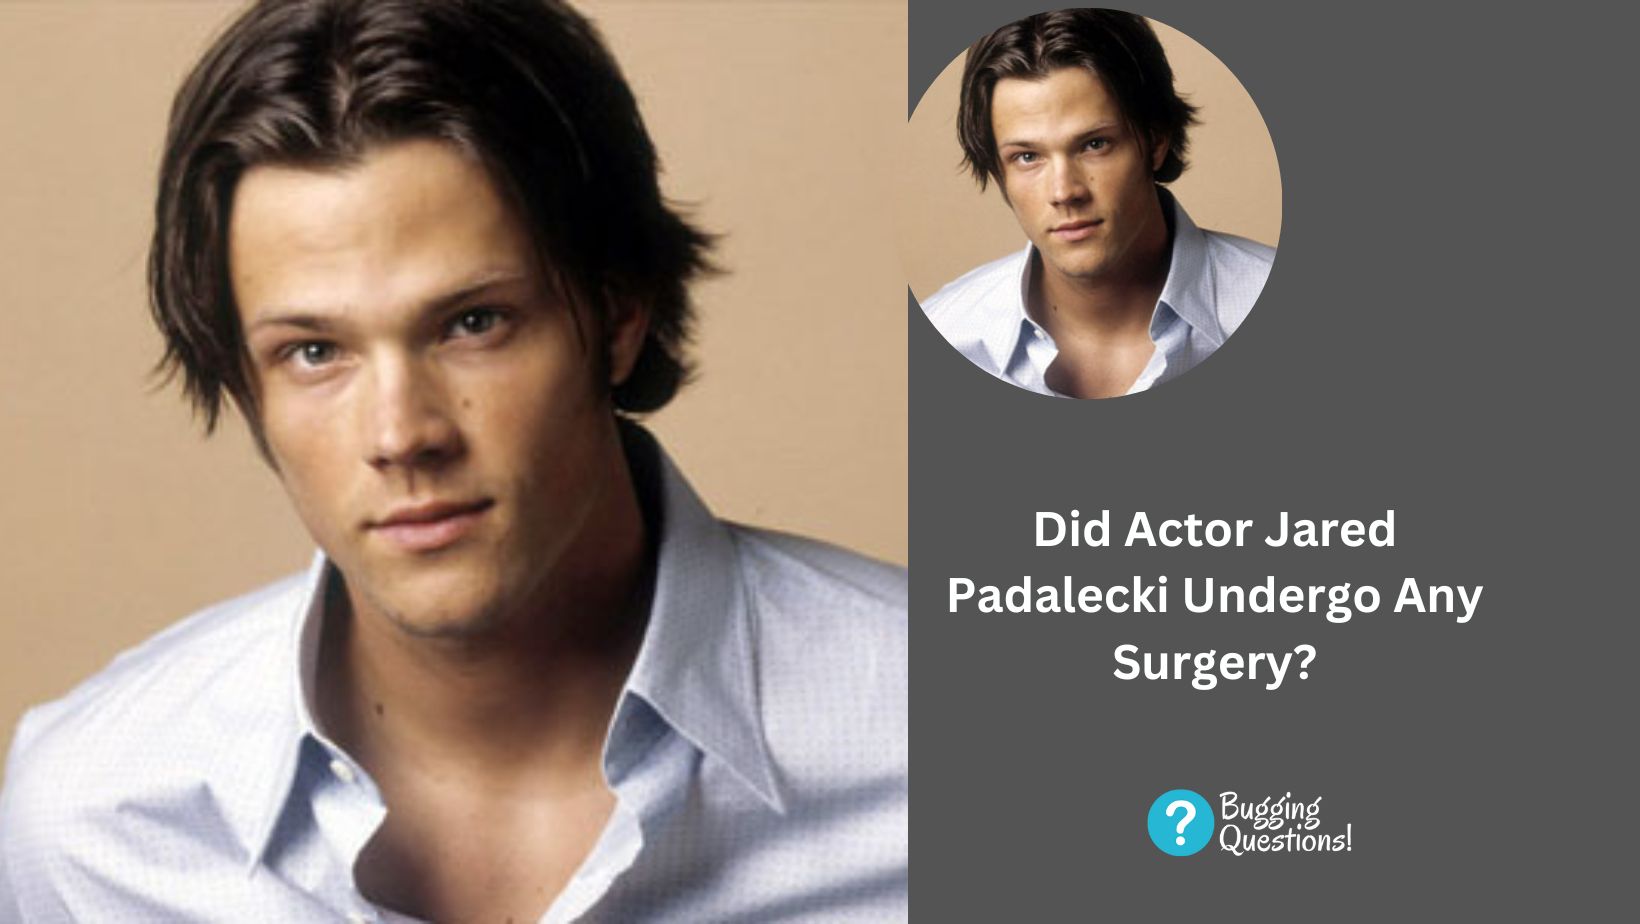 Did Actor Jared Padalecki Undergo Any Surgery?